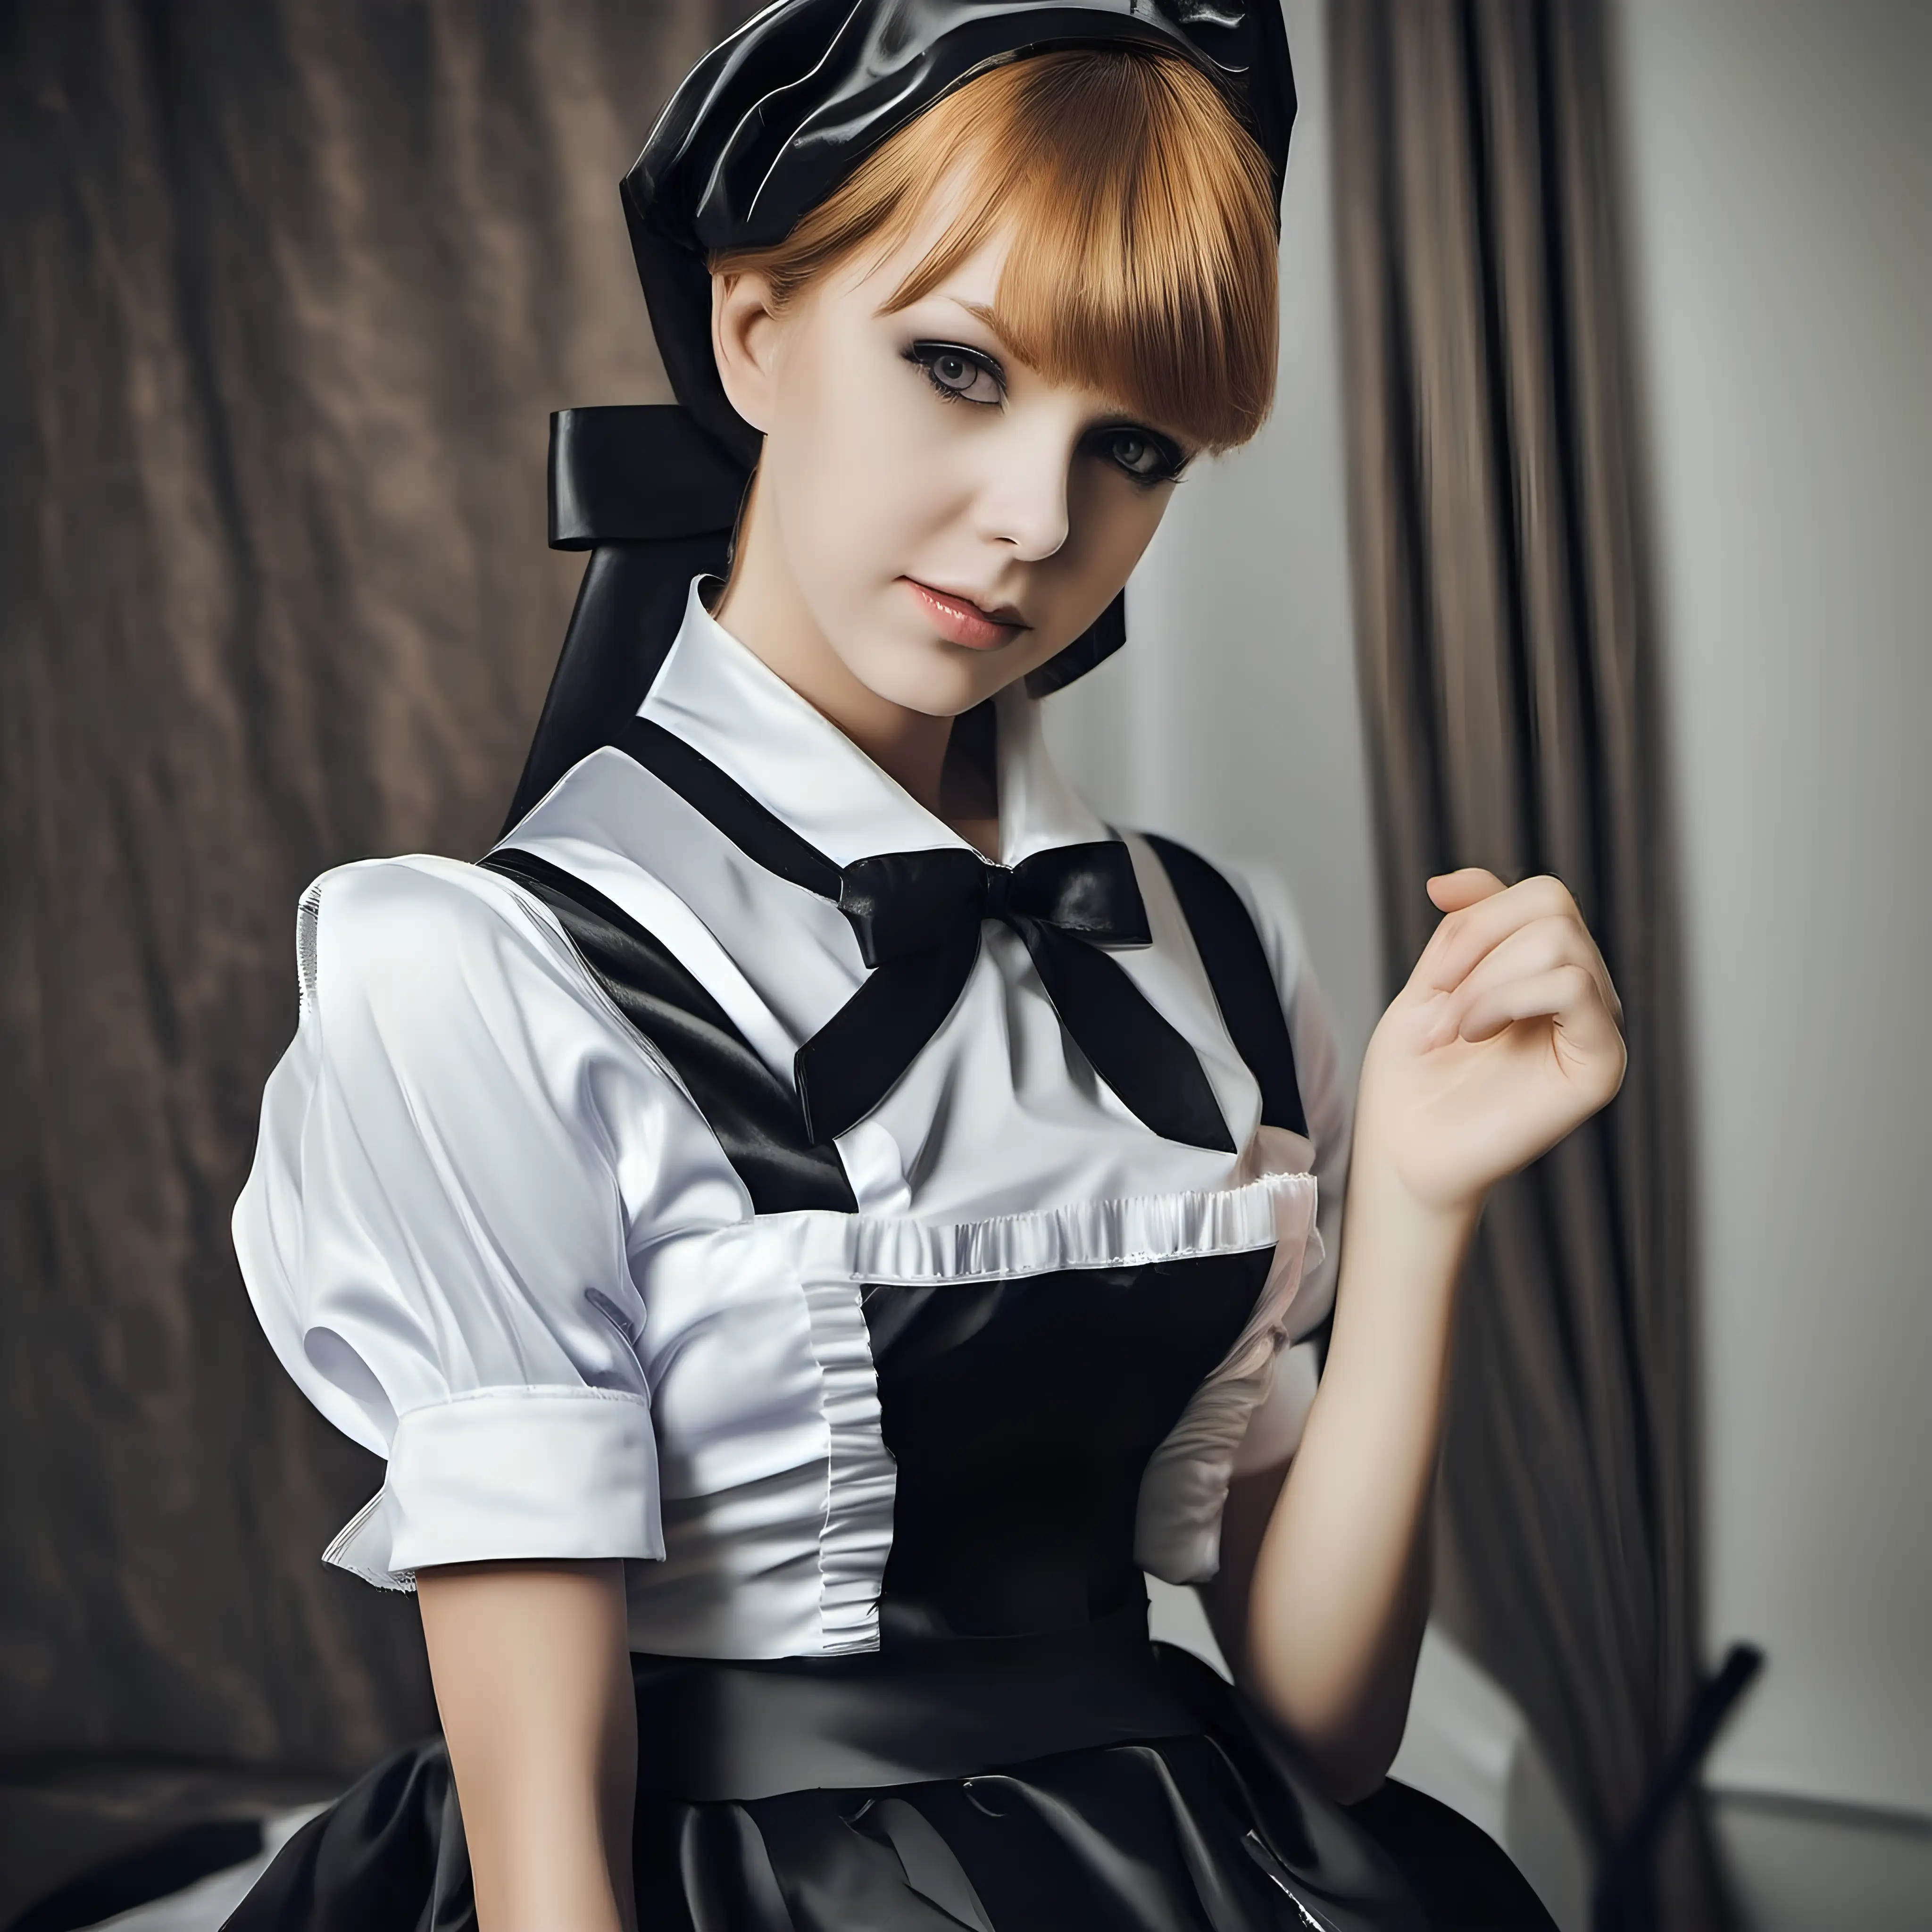 Elegant Maid Uniforms Graceful Girl in Satin Attire